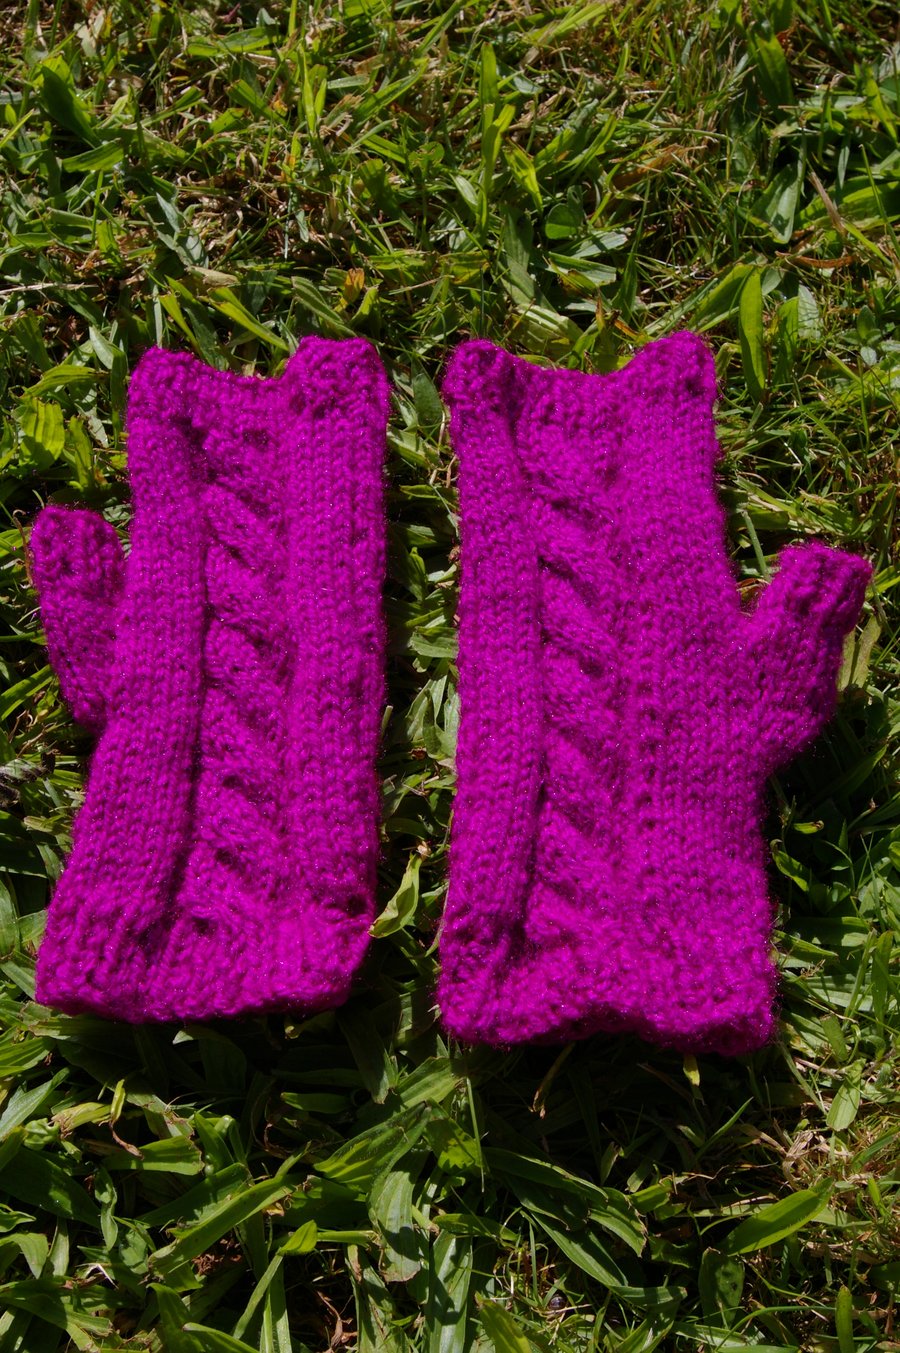 Fingerless Mittens - Knitting Pattern